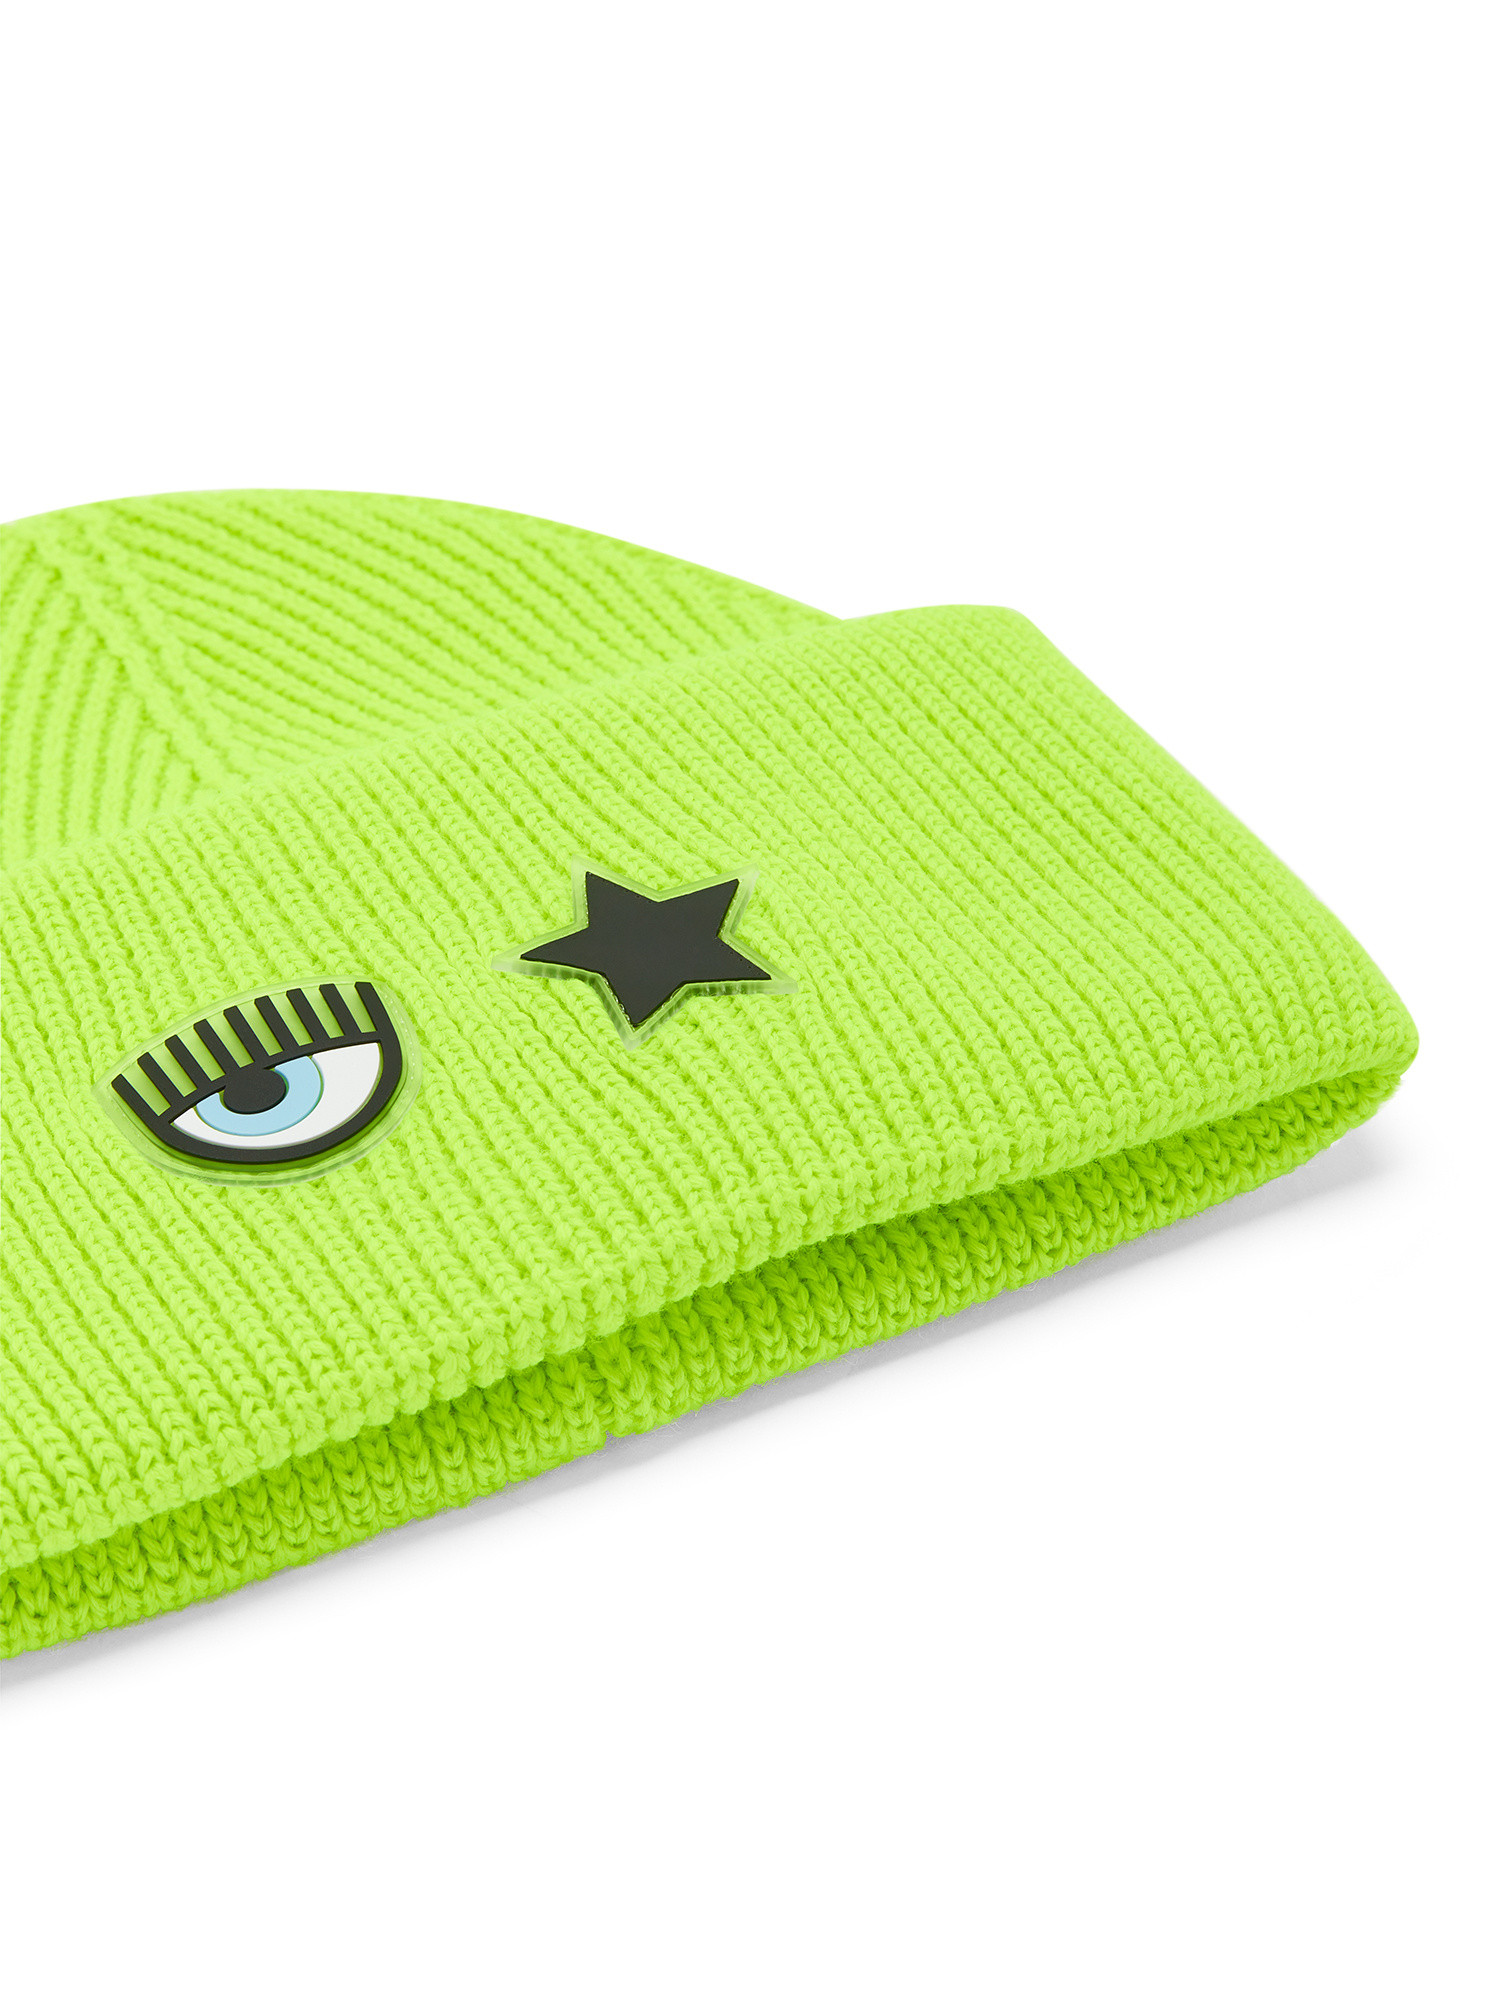 Chiara Ferragni - Beanie hat with Eye Star logo, Green, large image number 1